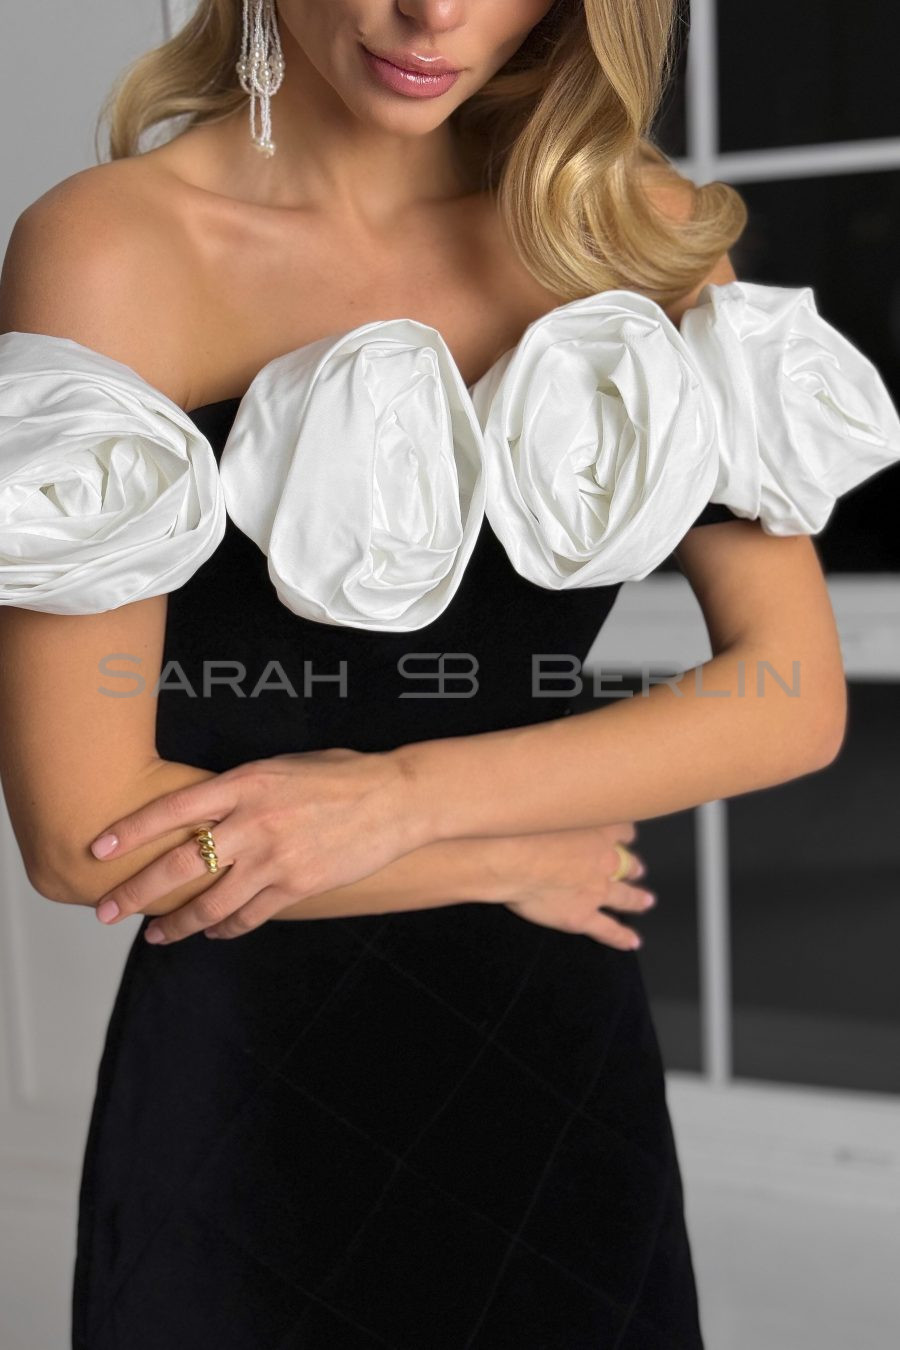 Above-the-knee dress in Italian velvet, off-the-shoulder, with white roses